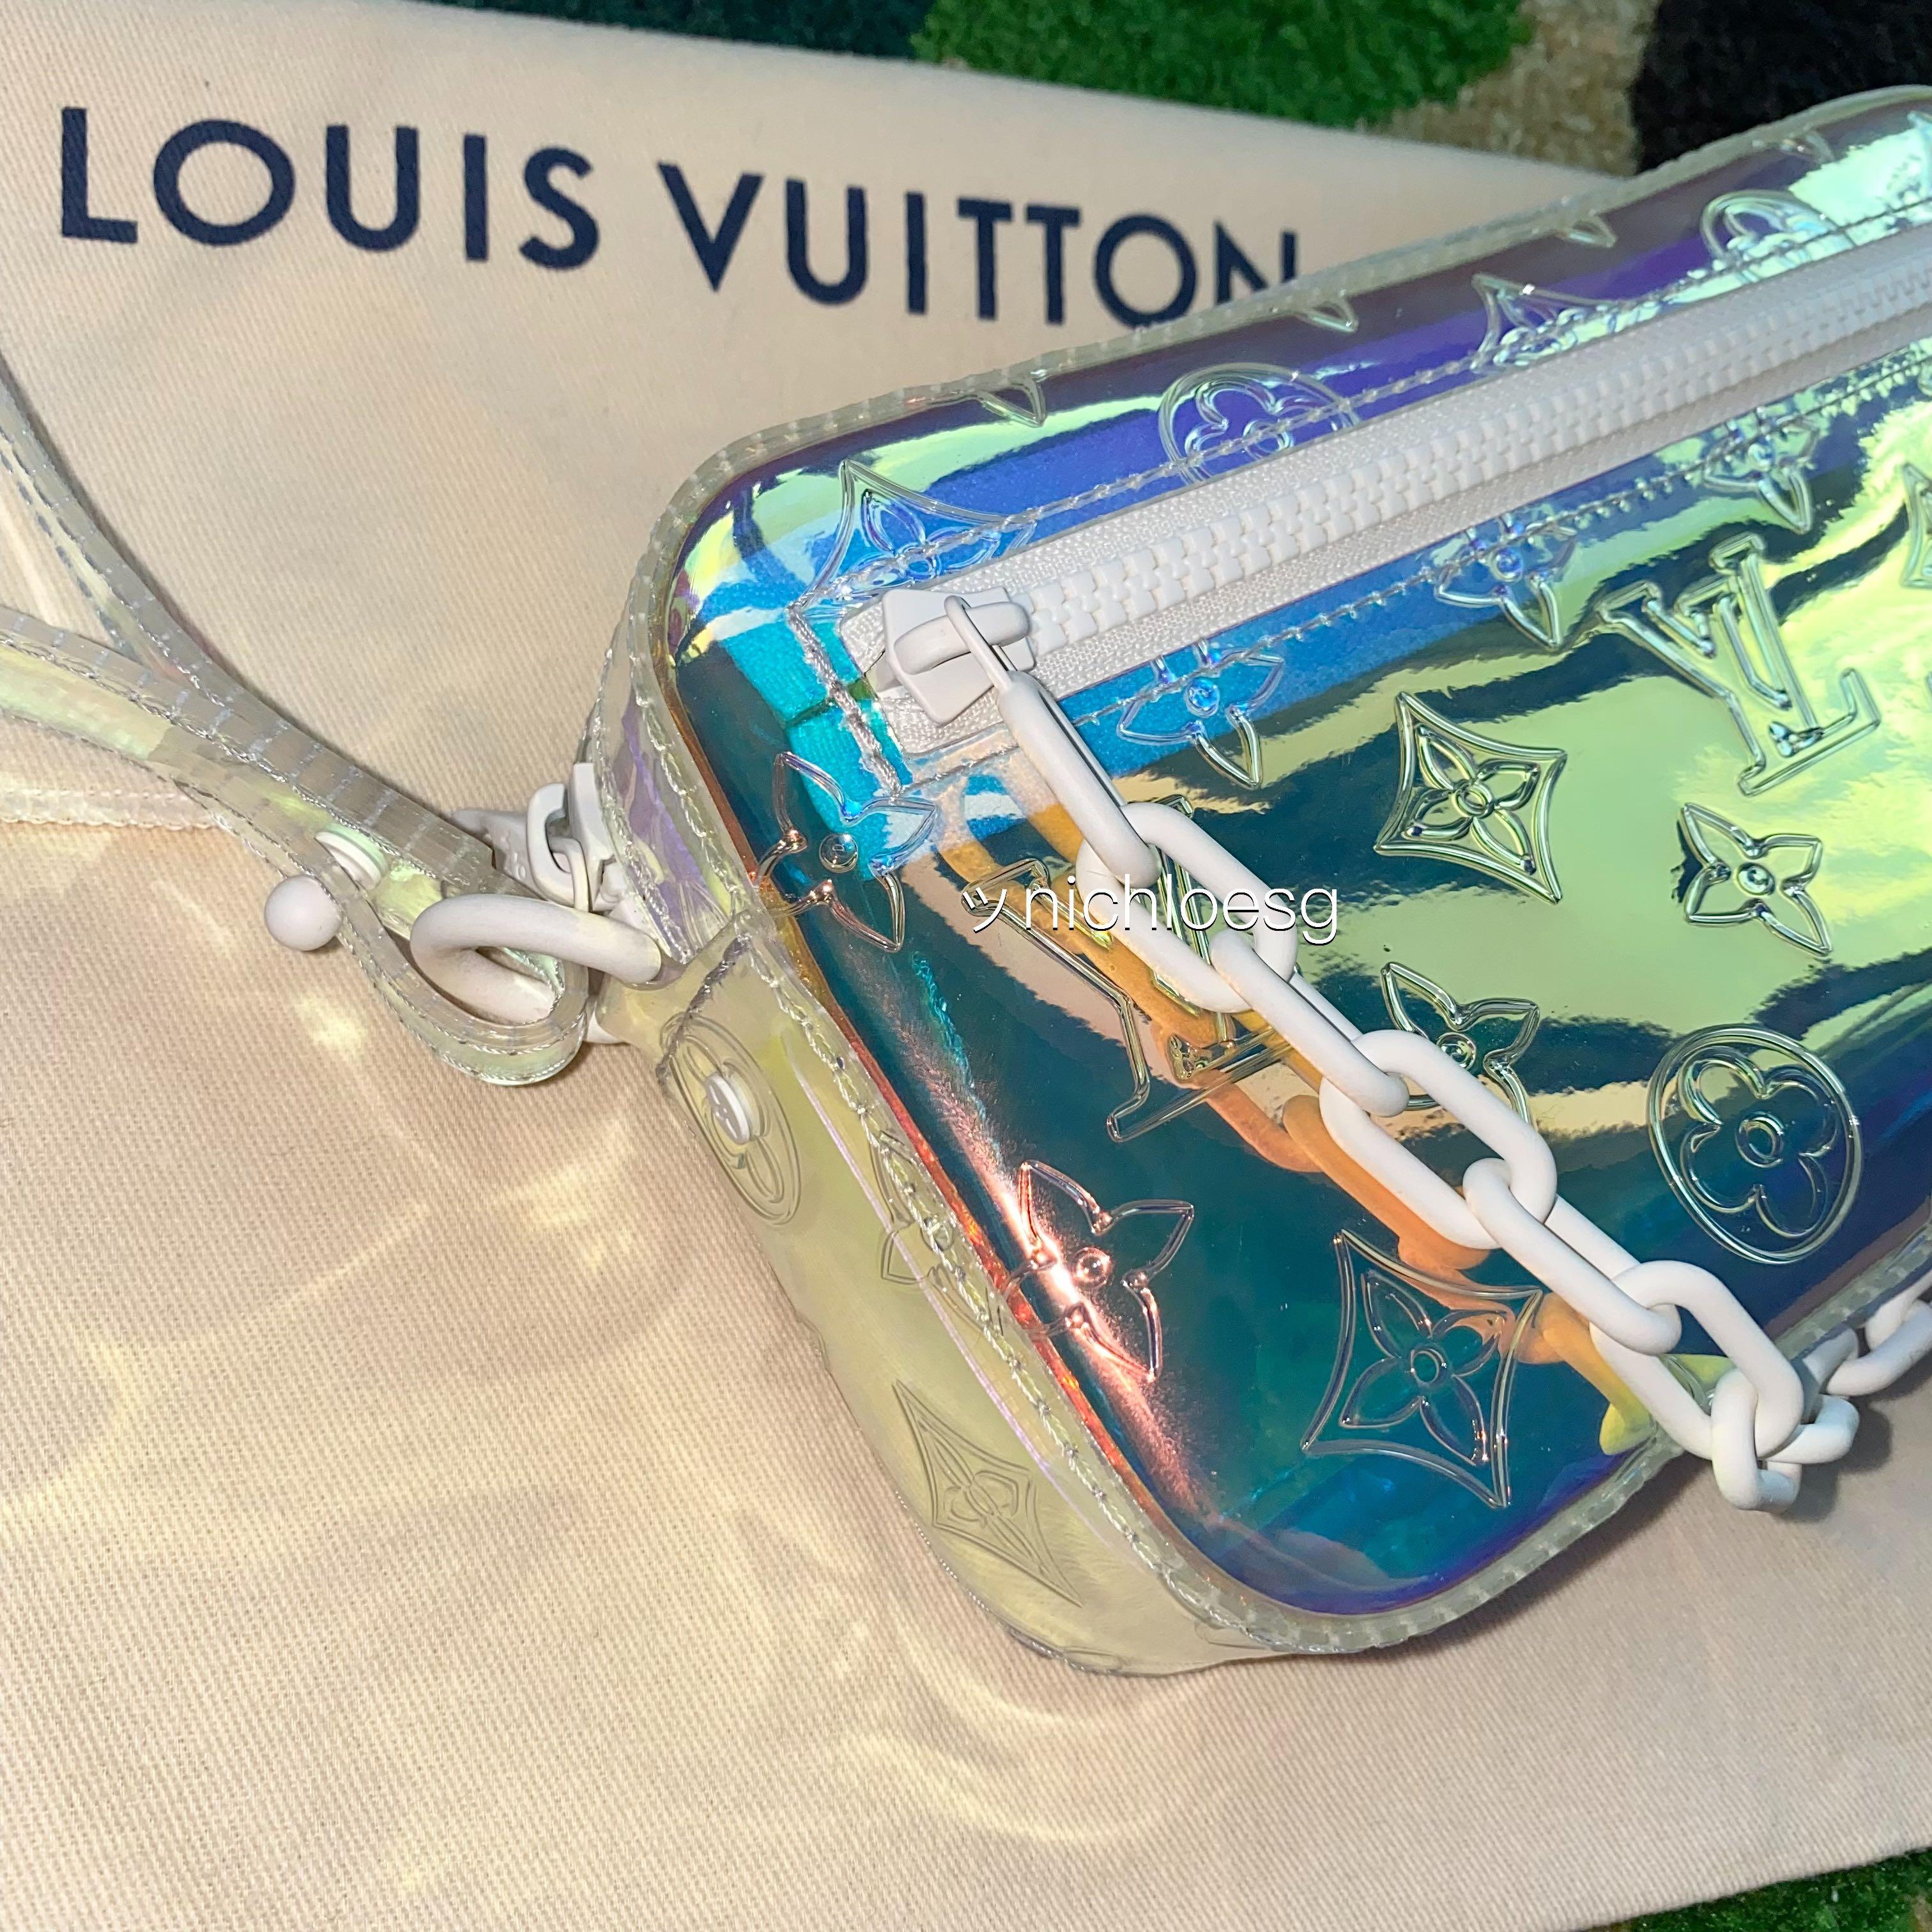 Louis Vuitton Pochette Volga Prism #LVMENFW19: Detailed review